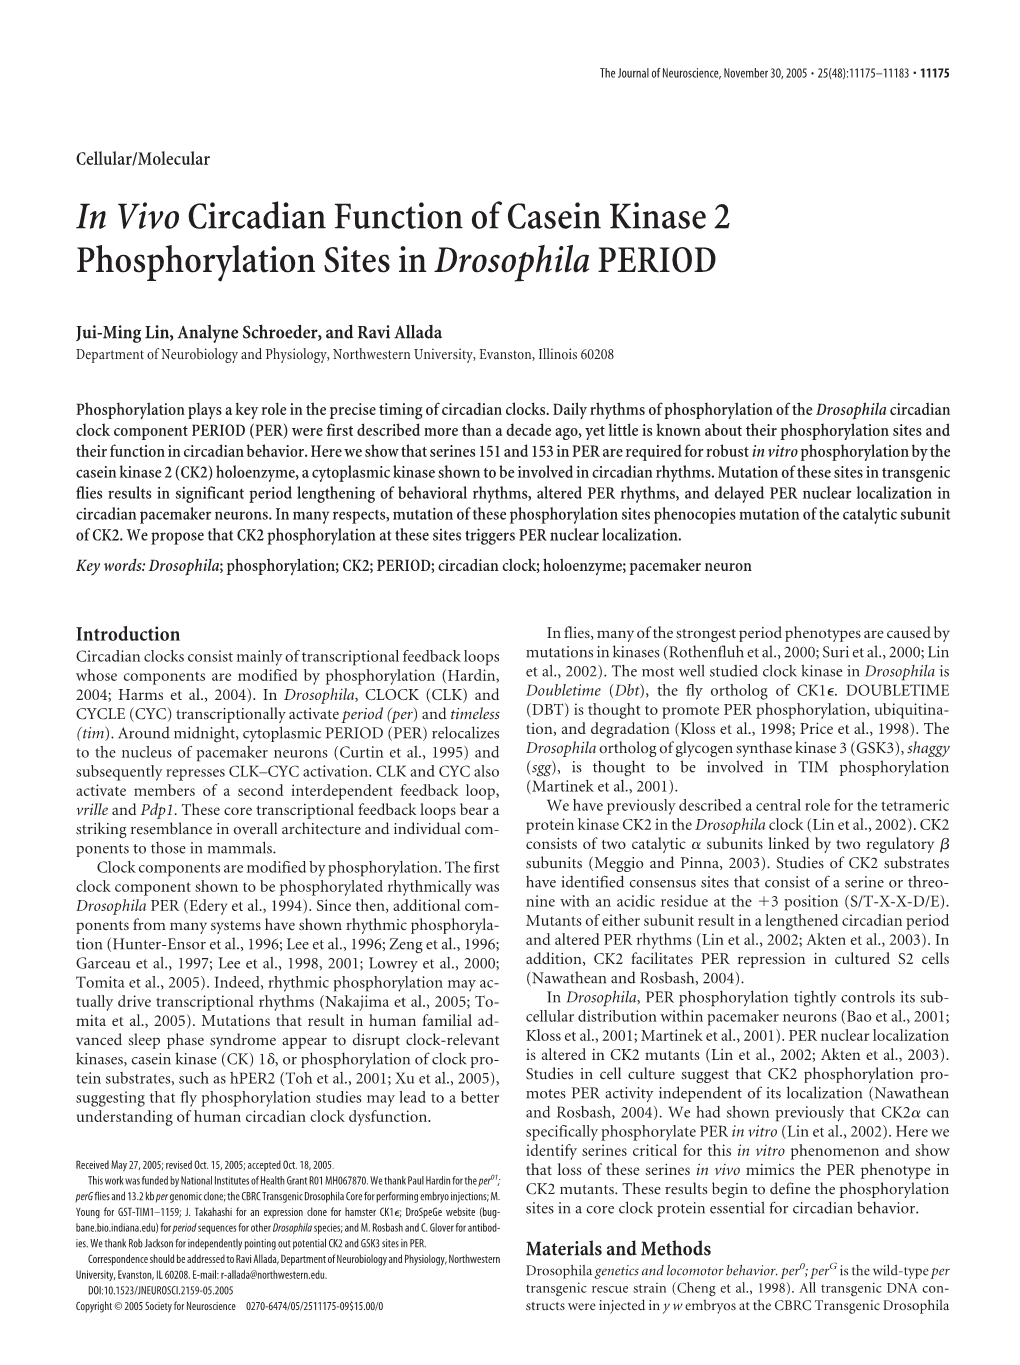 In Vivocircadian Function of Casein Kinase 2 Phosphorylation Sites Indrosophilaperiod